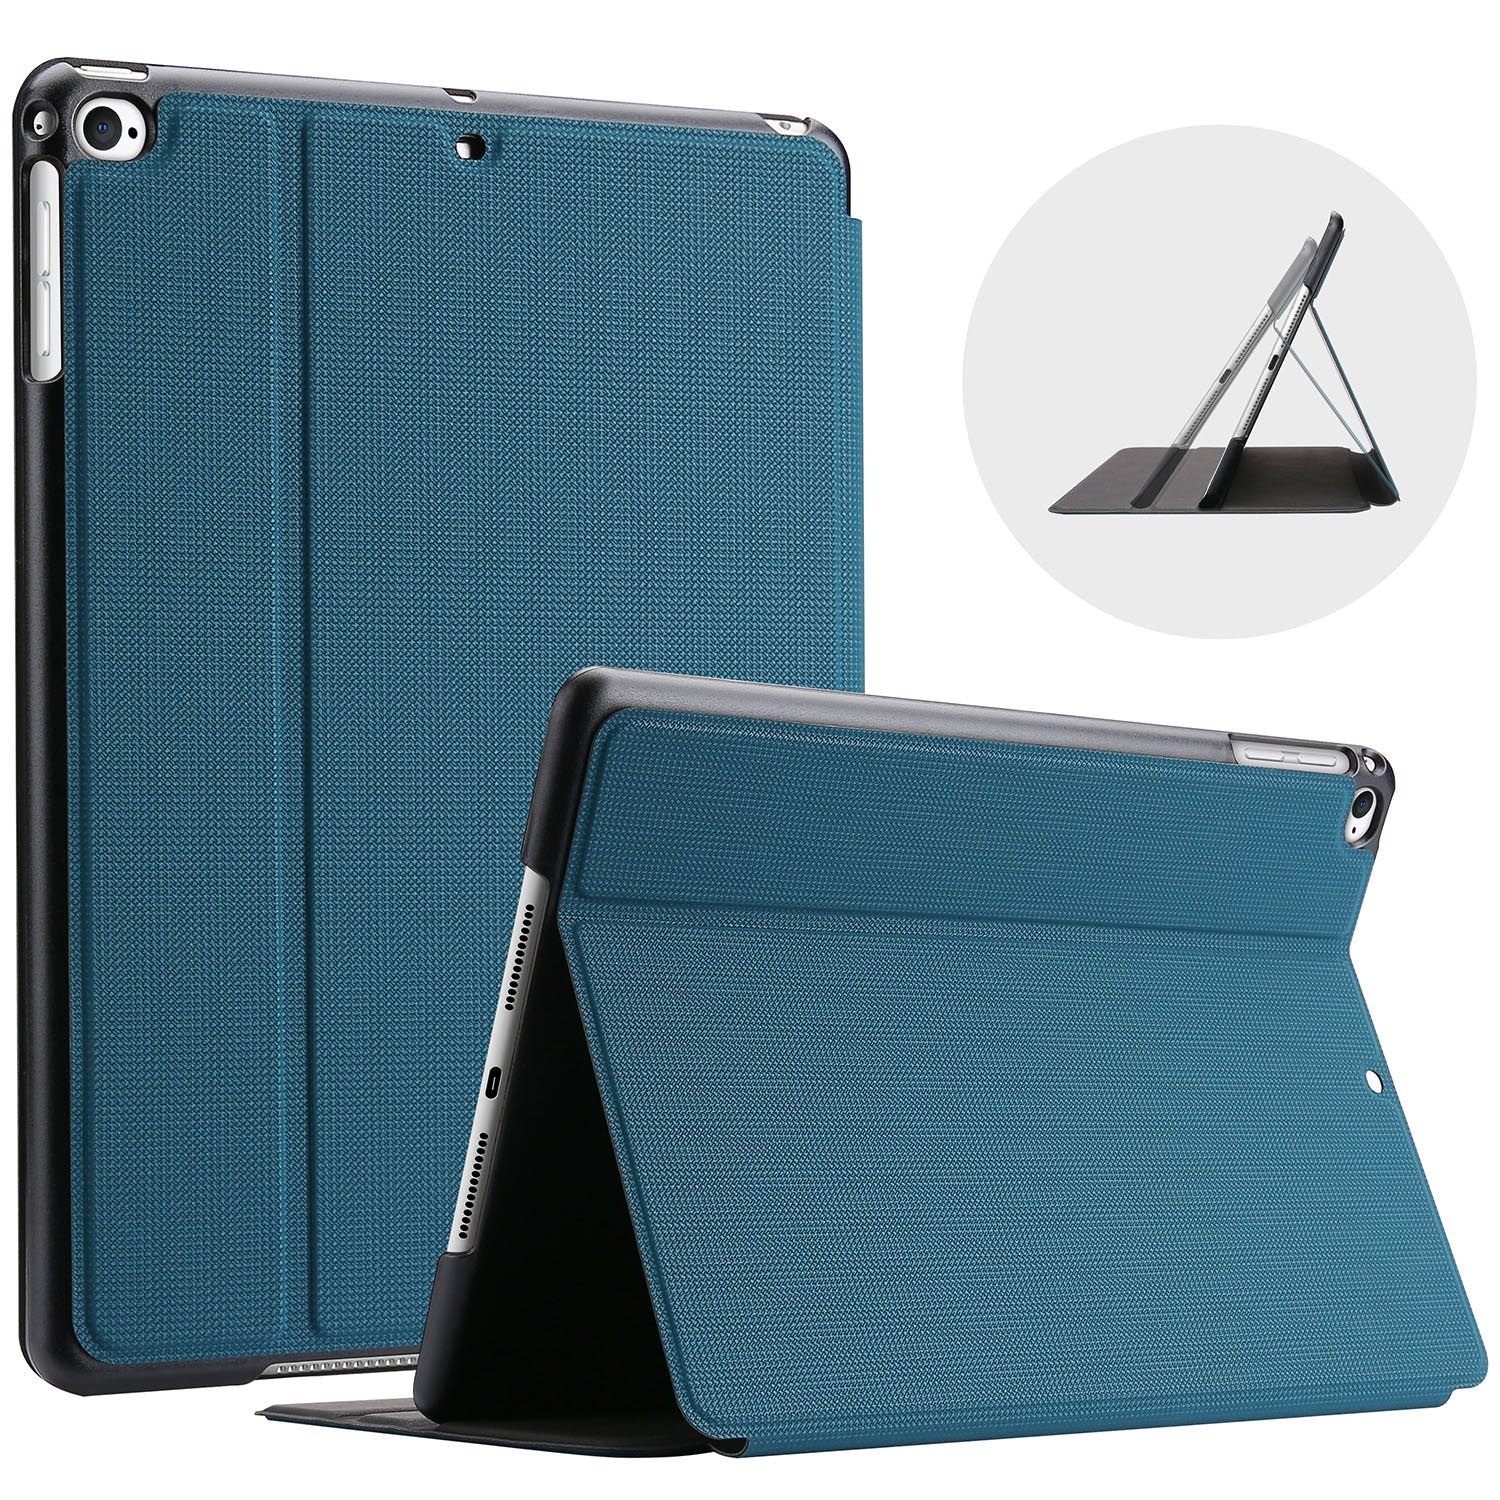 iPad 9.7 Inch 5th/6th Generation Slim Case | ProCase teal